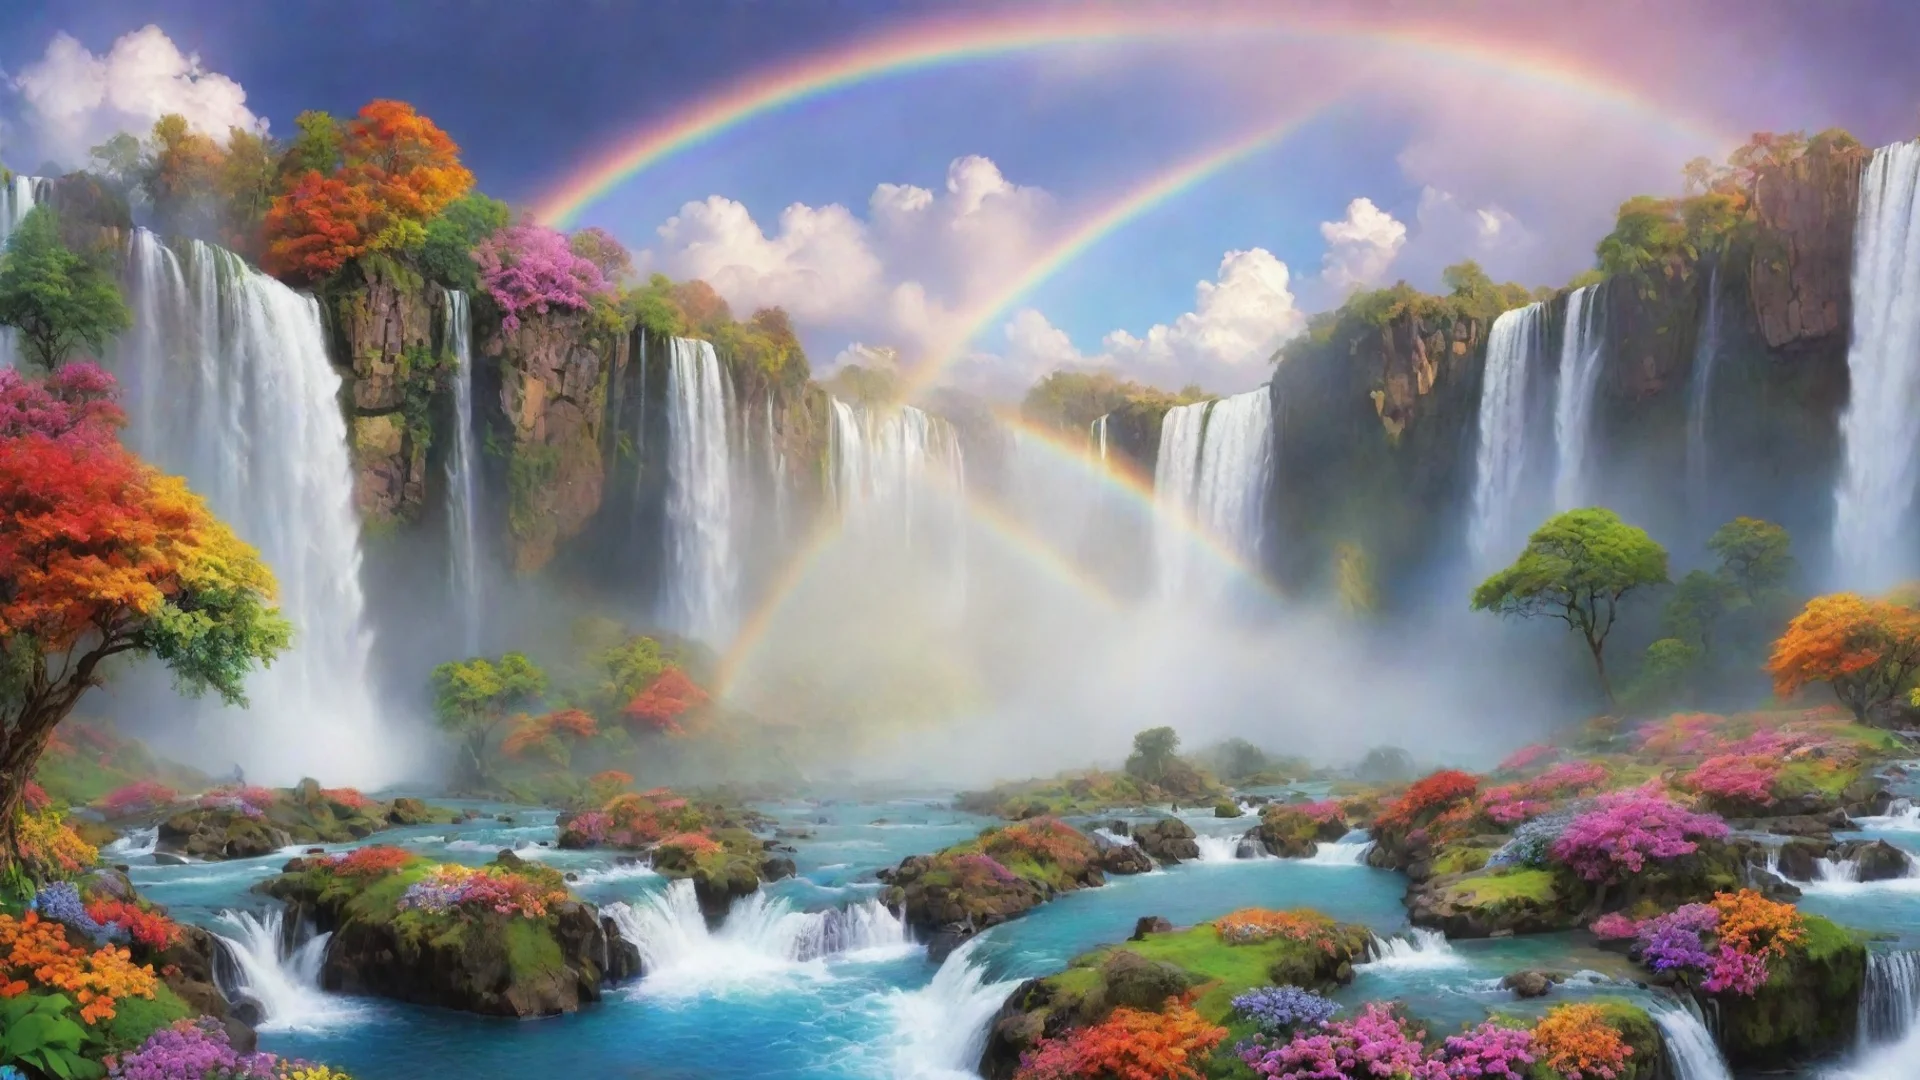 aidreamy colorful landscape alian world amazing beautiful utopian colors flowers waterfalls rainbows clouds wide